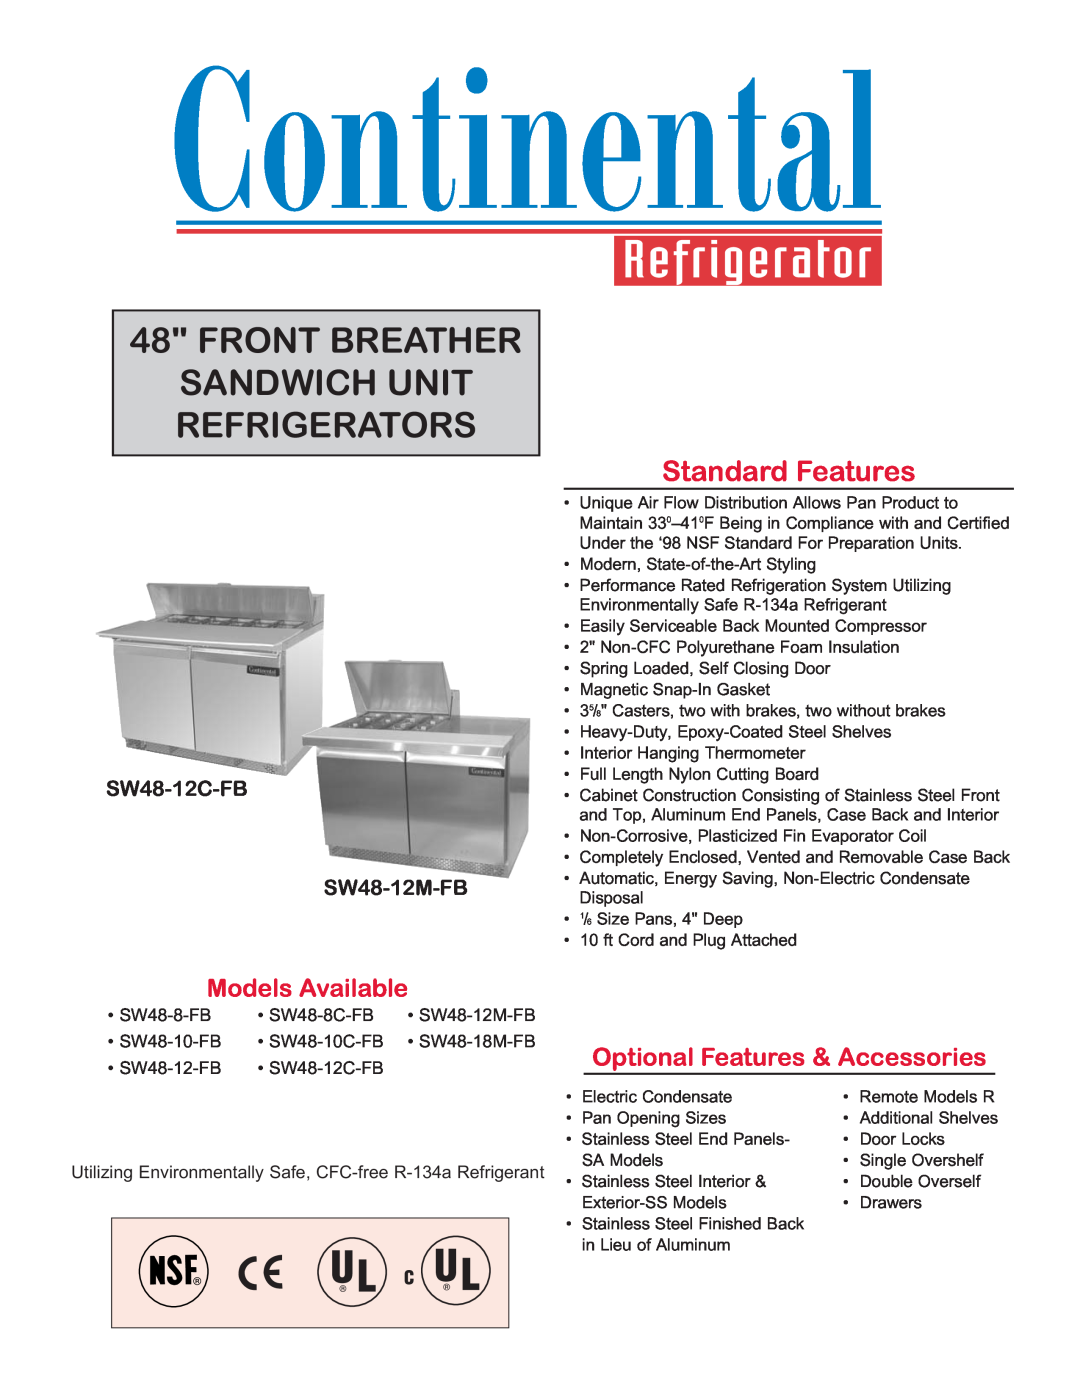 Continental Refrigerator SW48-18M-FB, SW48-8C-FB manual Front Breather Sandwich Unit Refrigerators, Standard Features 